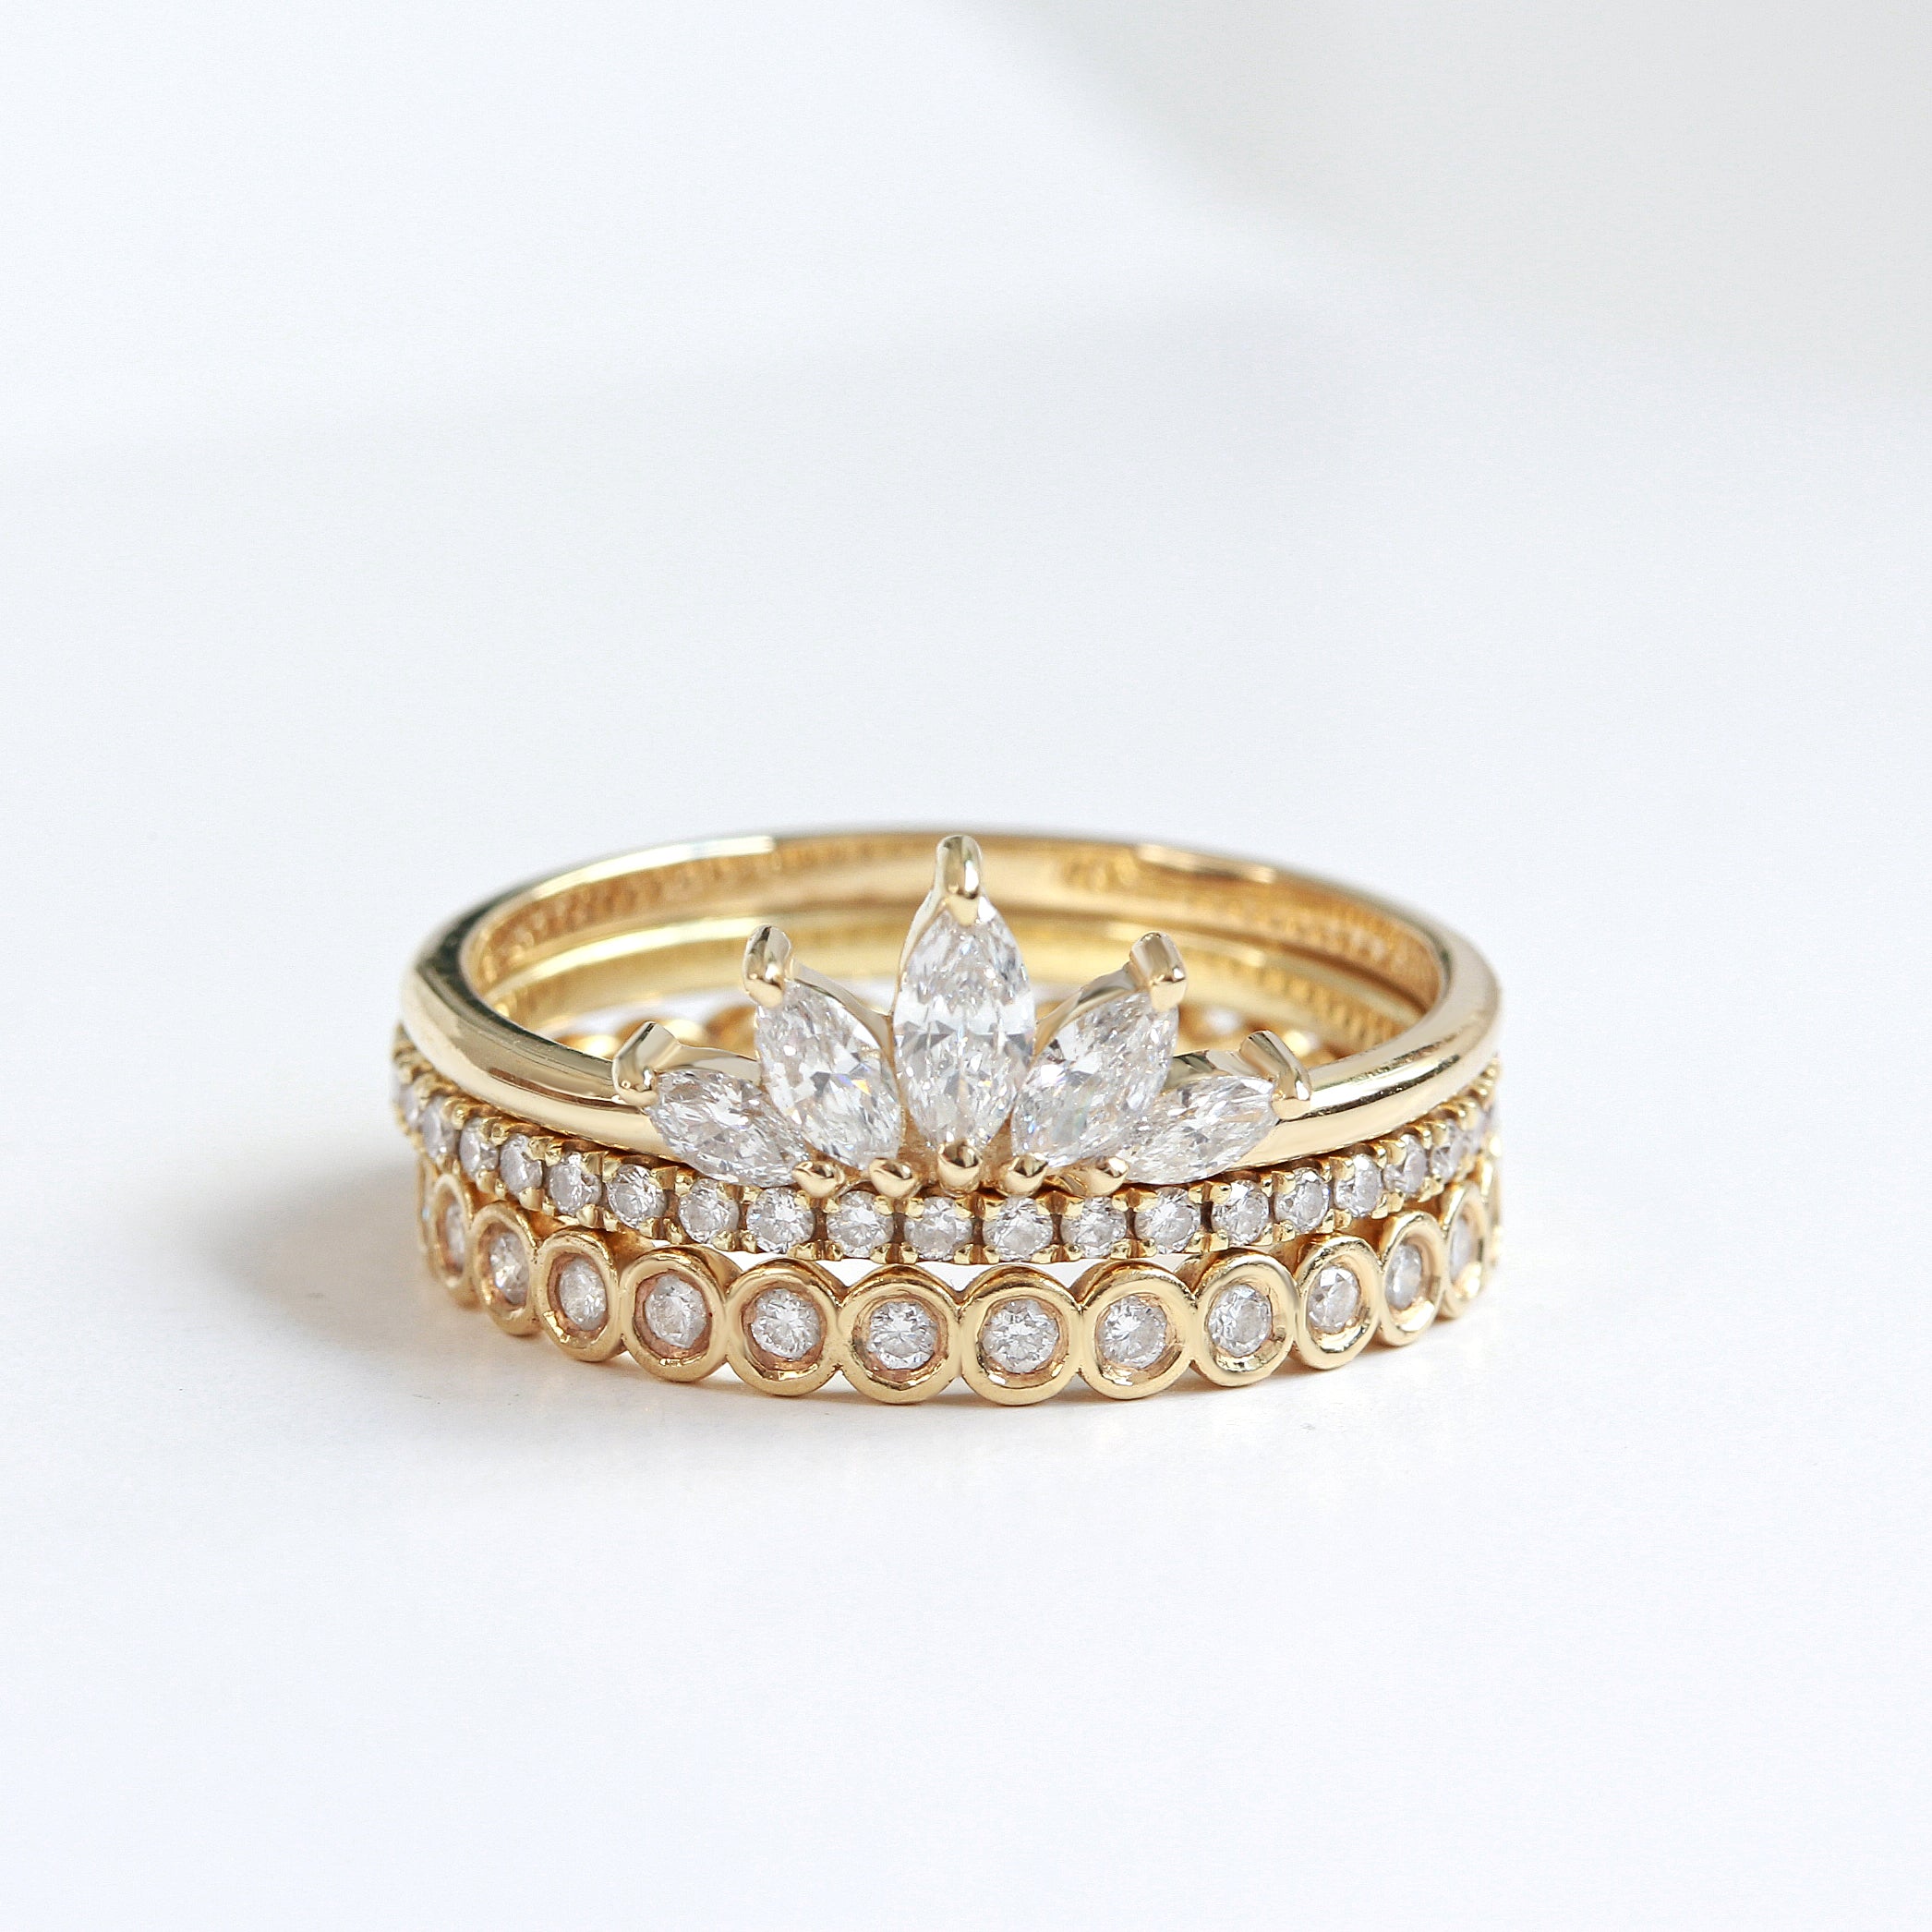 Marquise unique diamond wedding ring - "Swan"